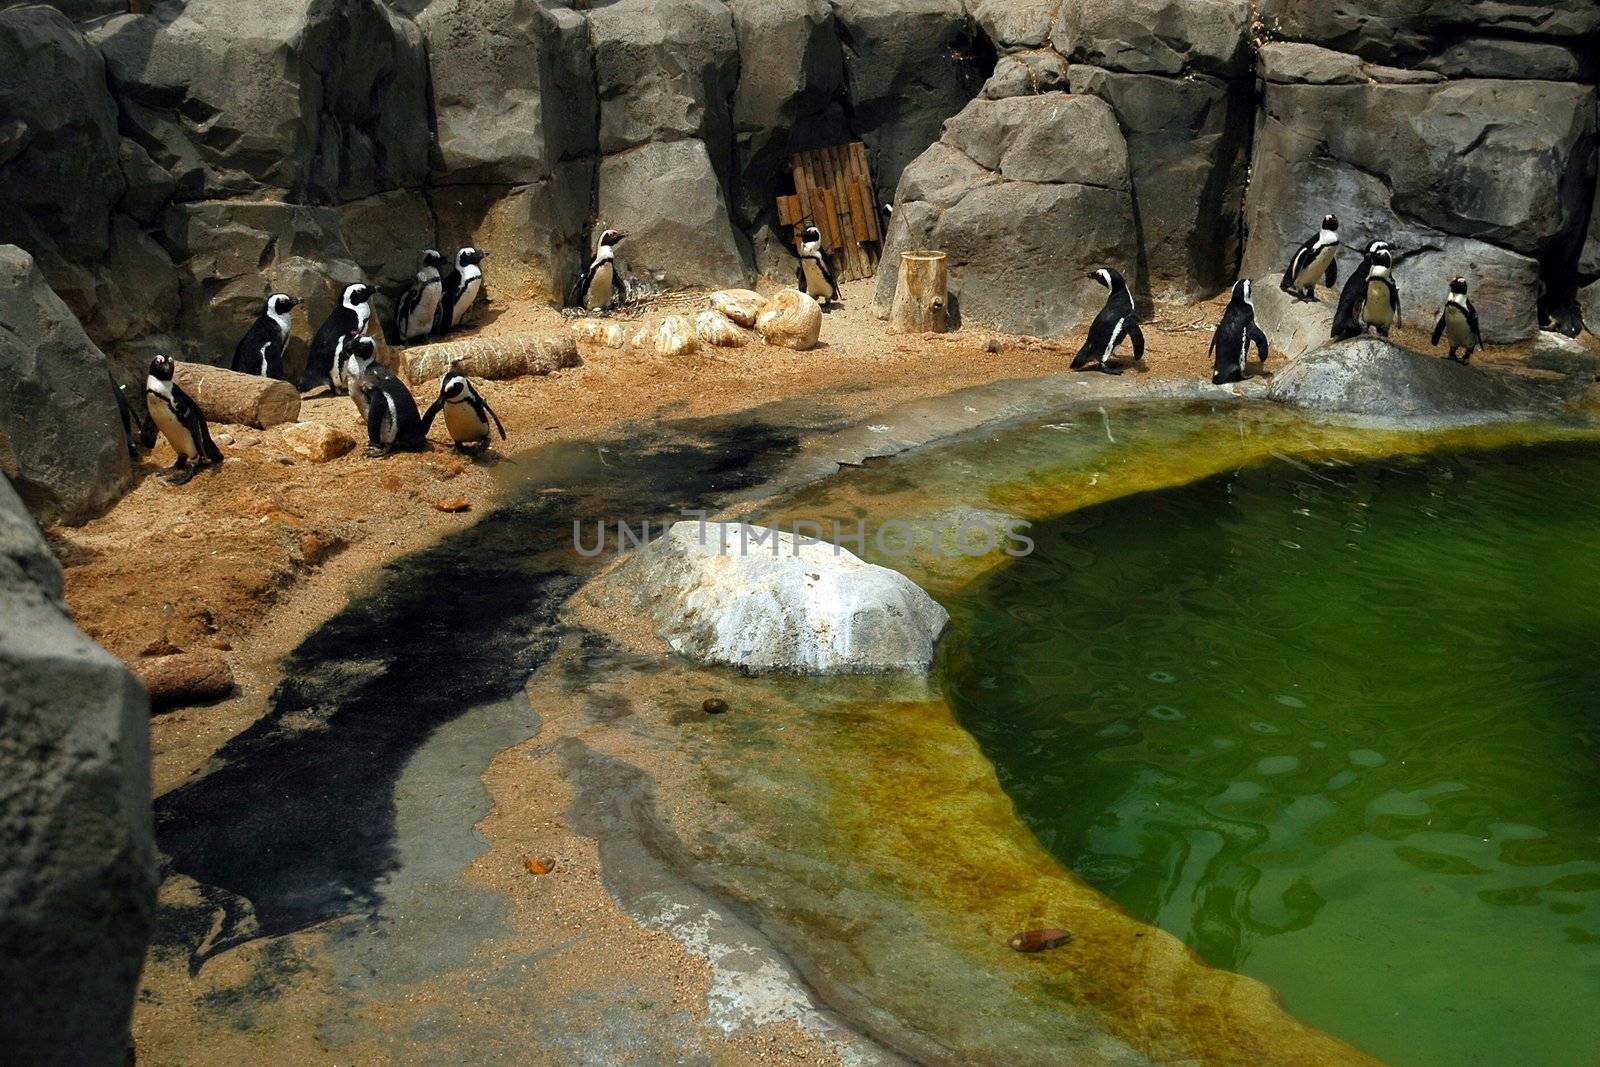 penguin in zoo by lehnerda